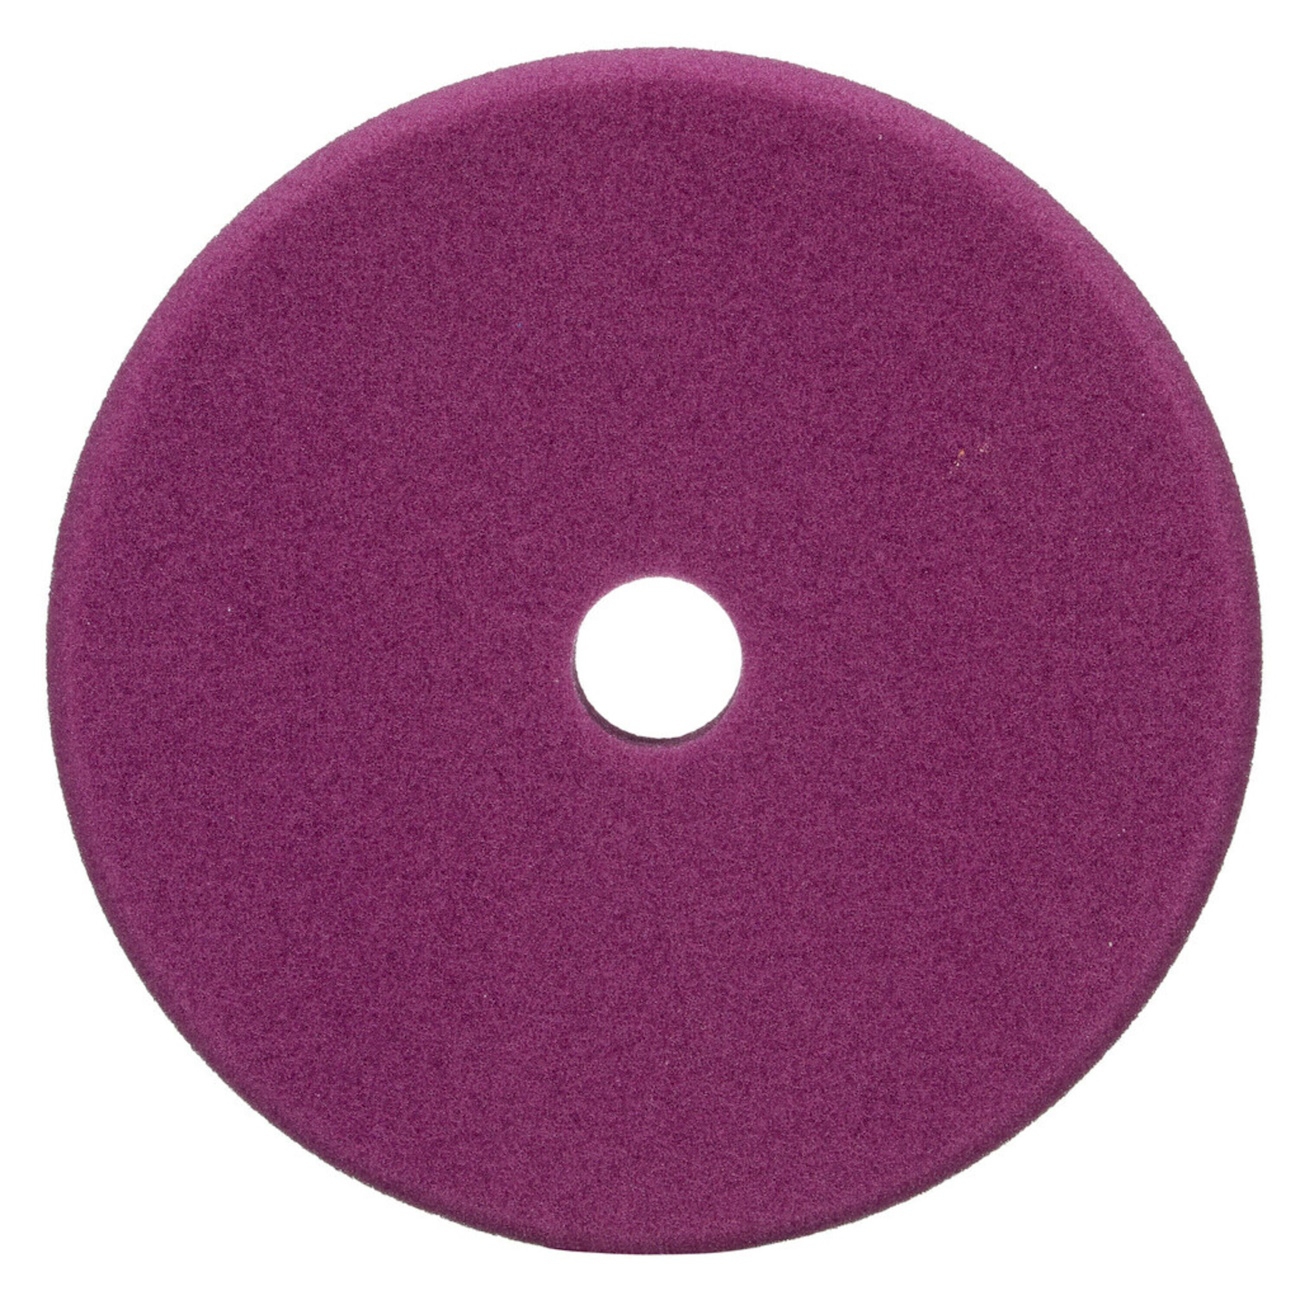 3M Perfect-it fine foam polishing pad for eccentric polishing machine, violet, 150 mm, 34127 (Pack=2 pieces)